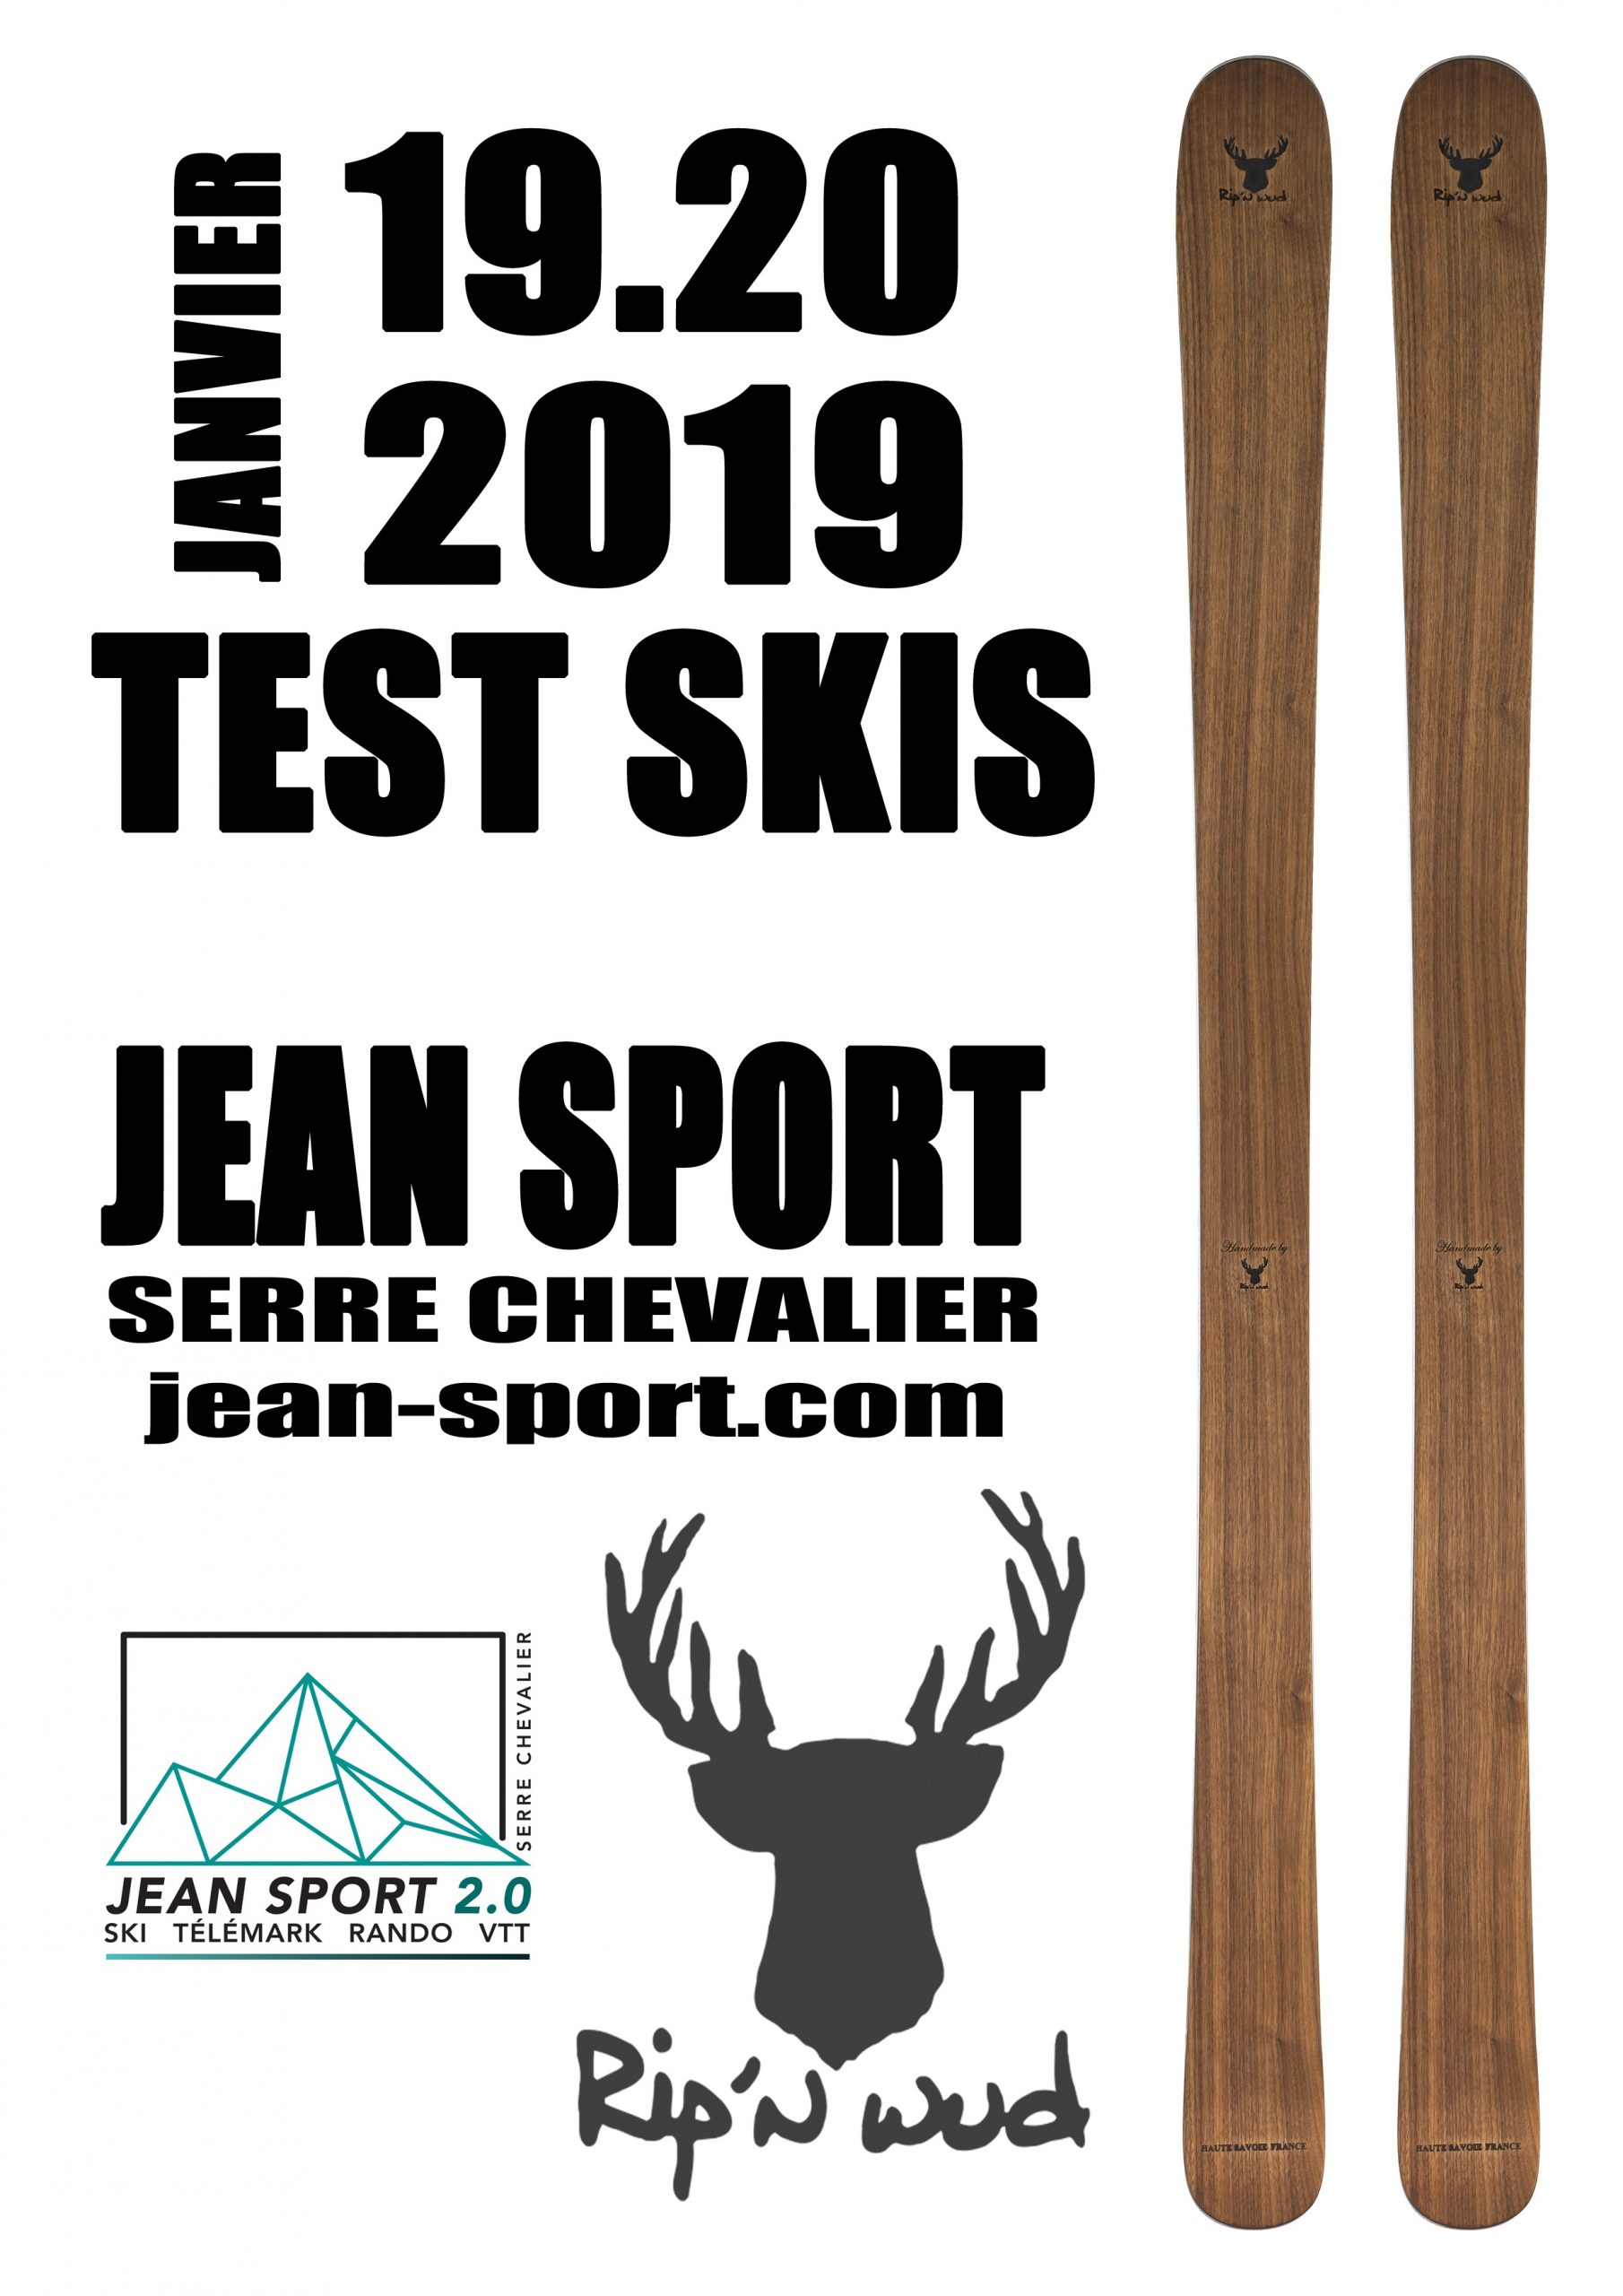 ripnwud handmade skis text tour ski jean sport serre chevalier  scaled